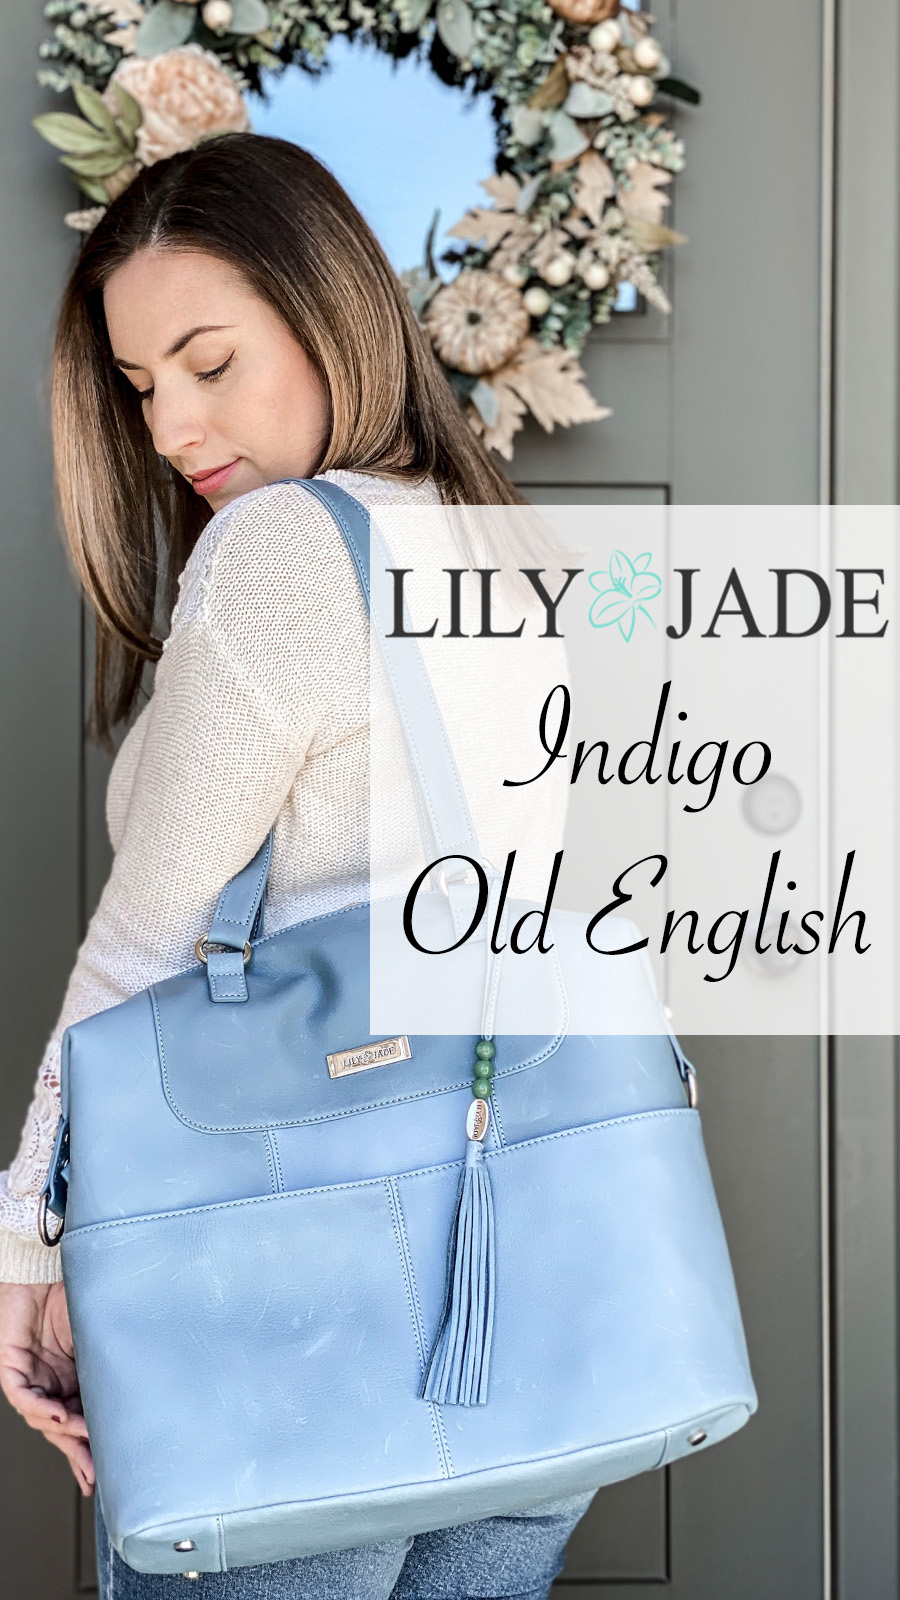 Lily Jade Old English Indigo pinterest.